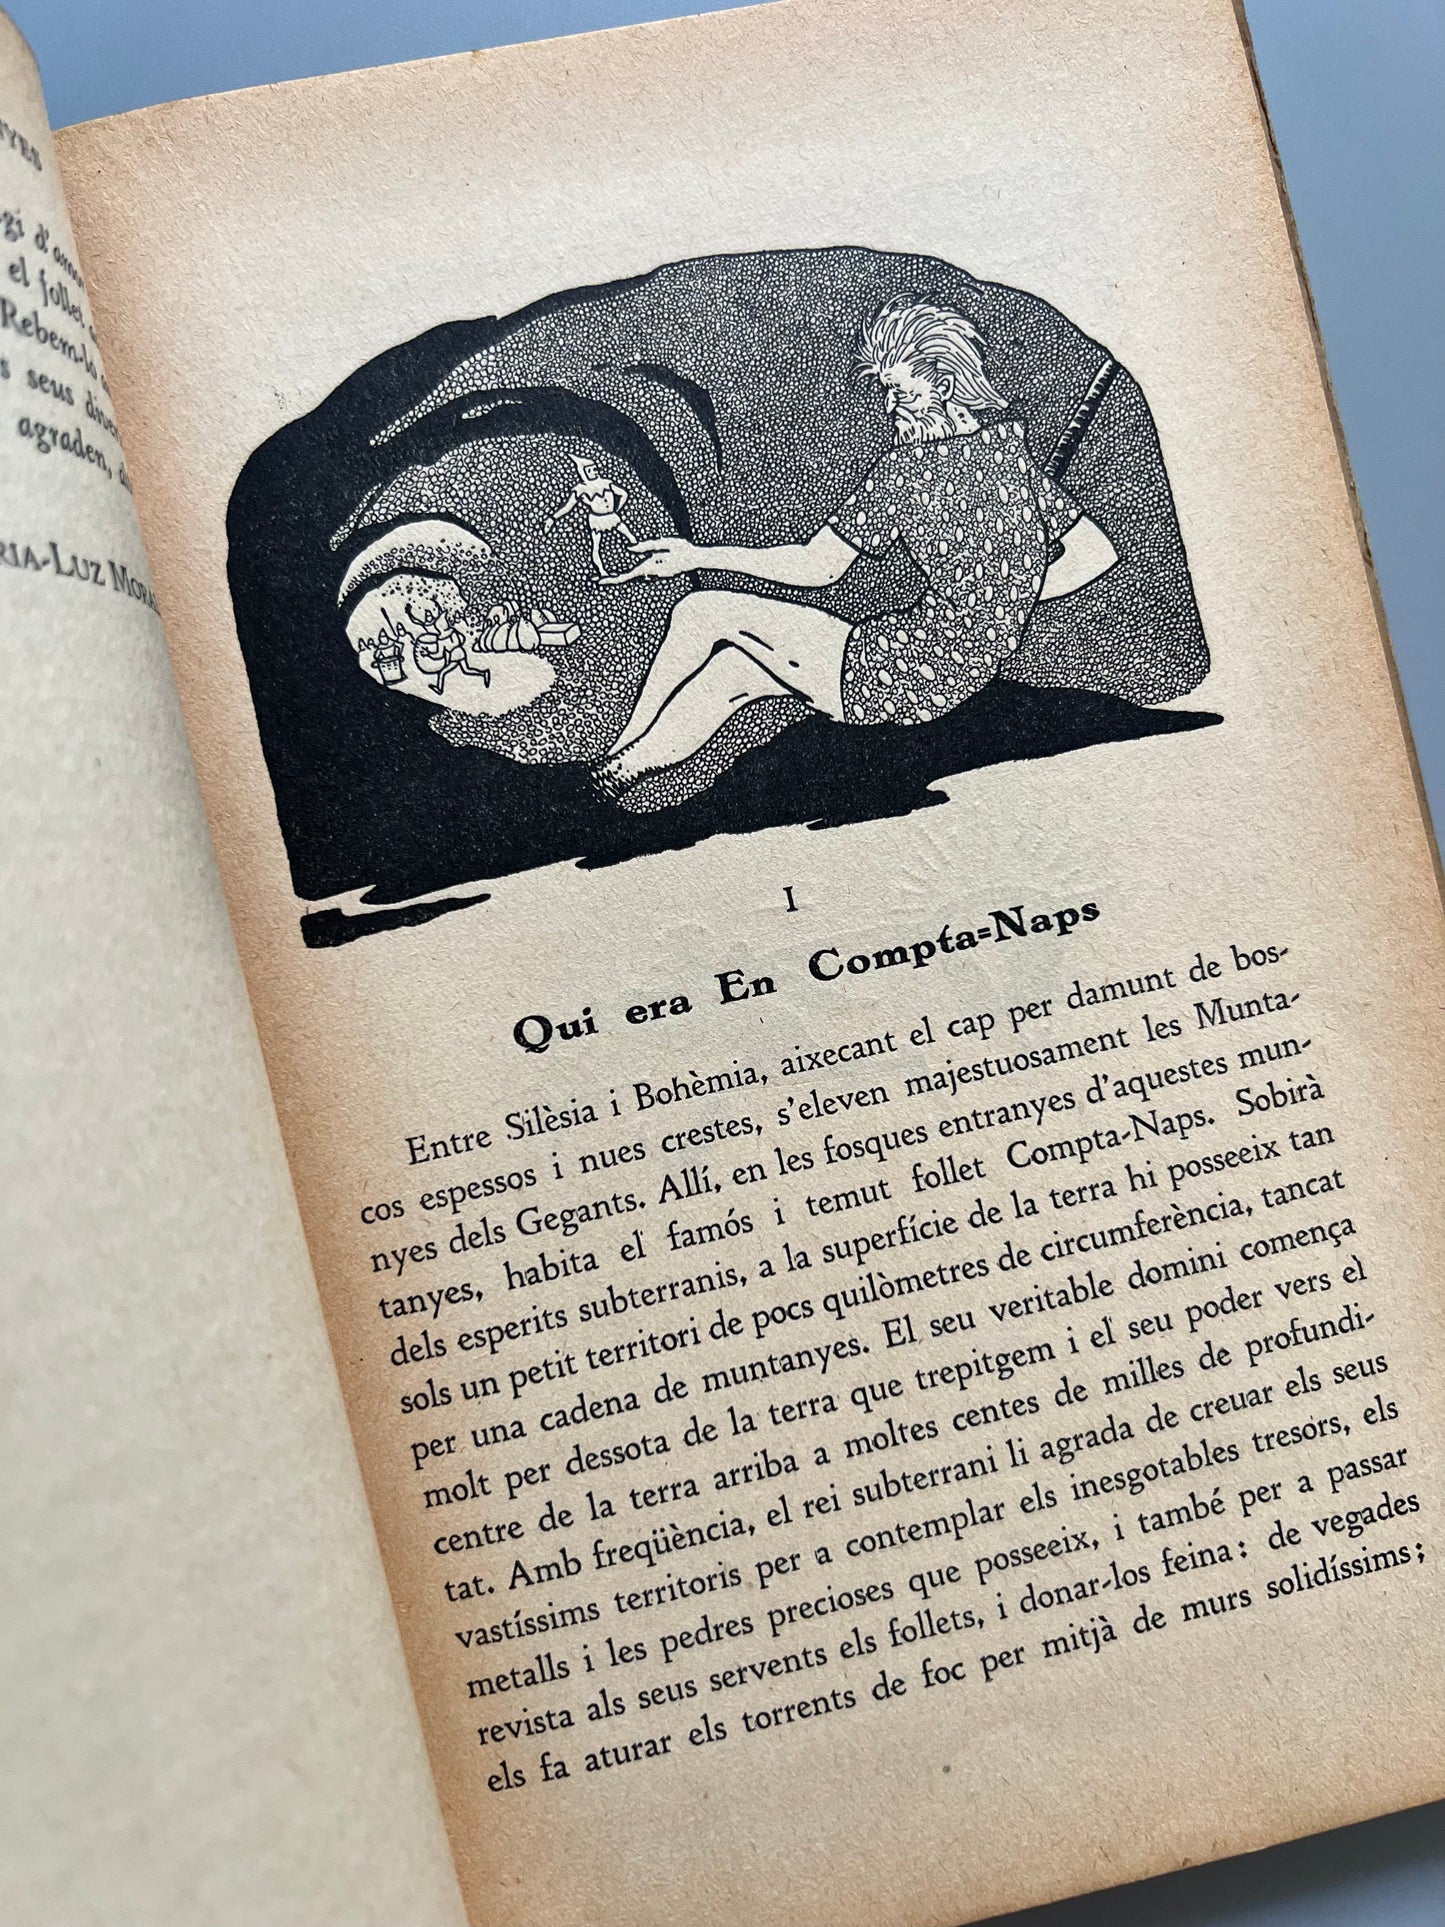 En Compta-naps, A. Müller - Editorial Juventud, 1930